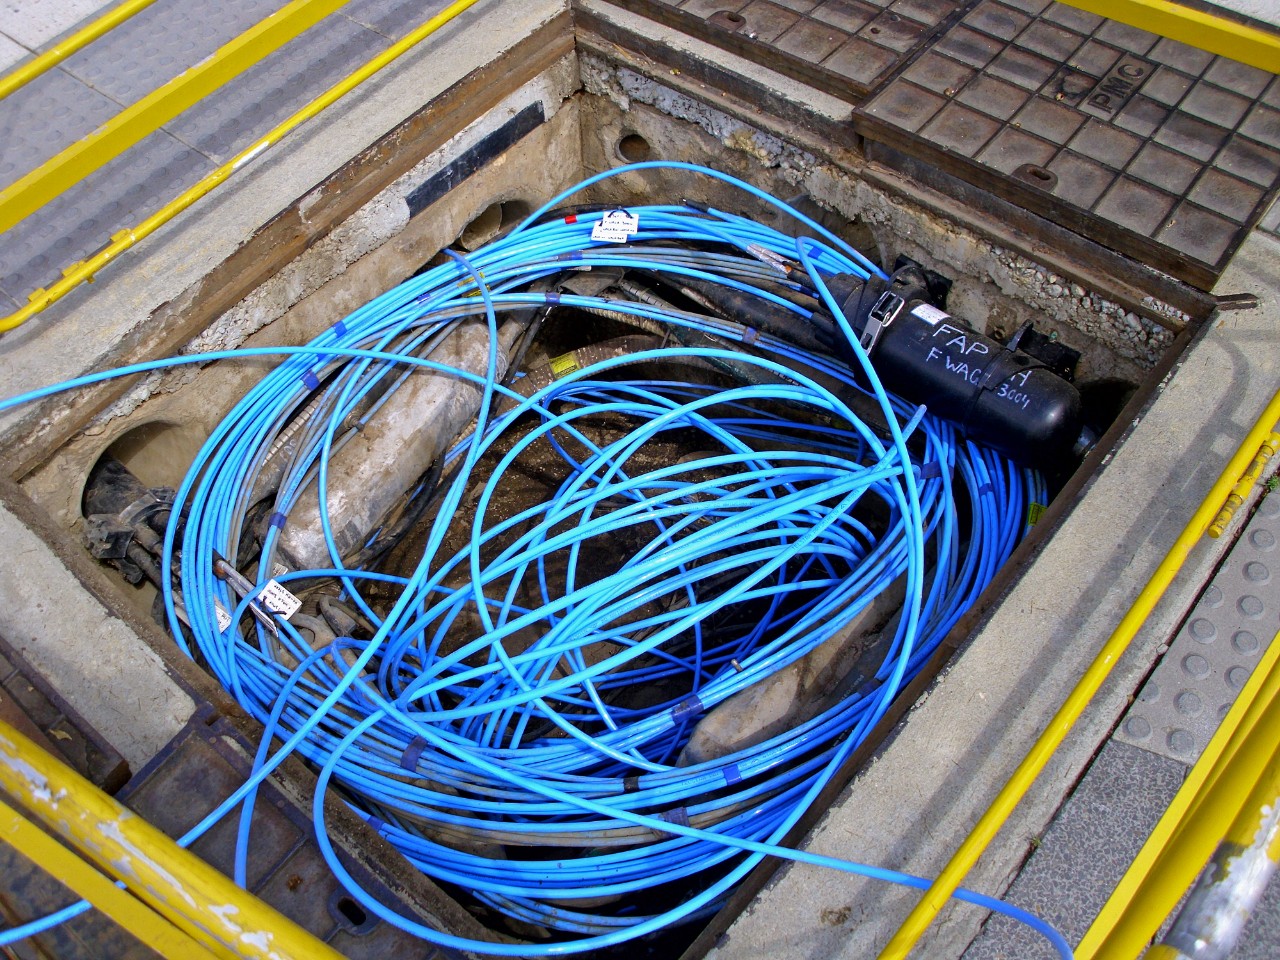 Chennai to get common optic fibre cable corridor